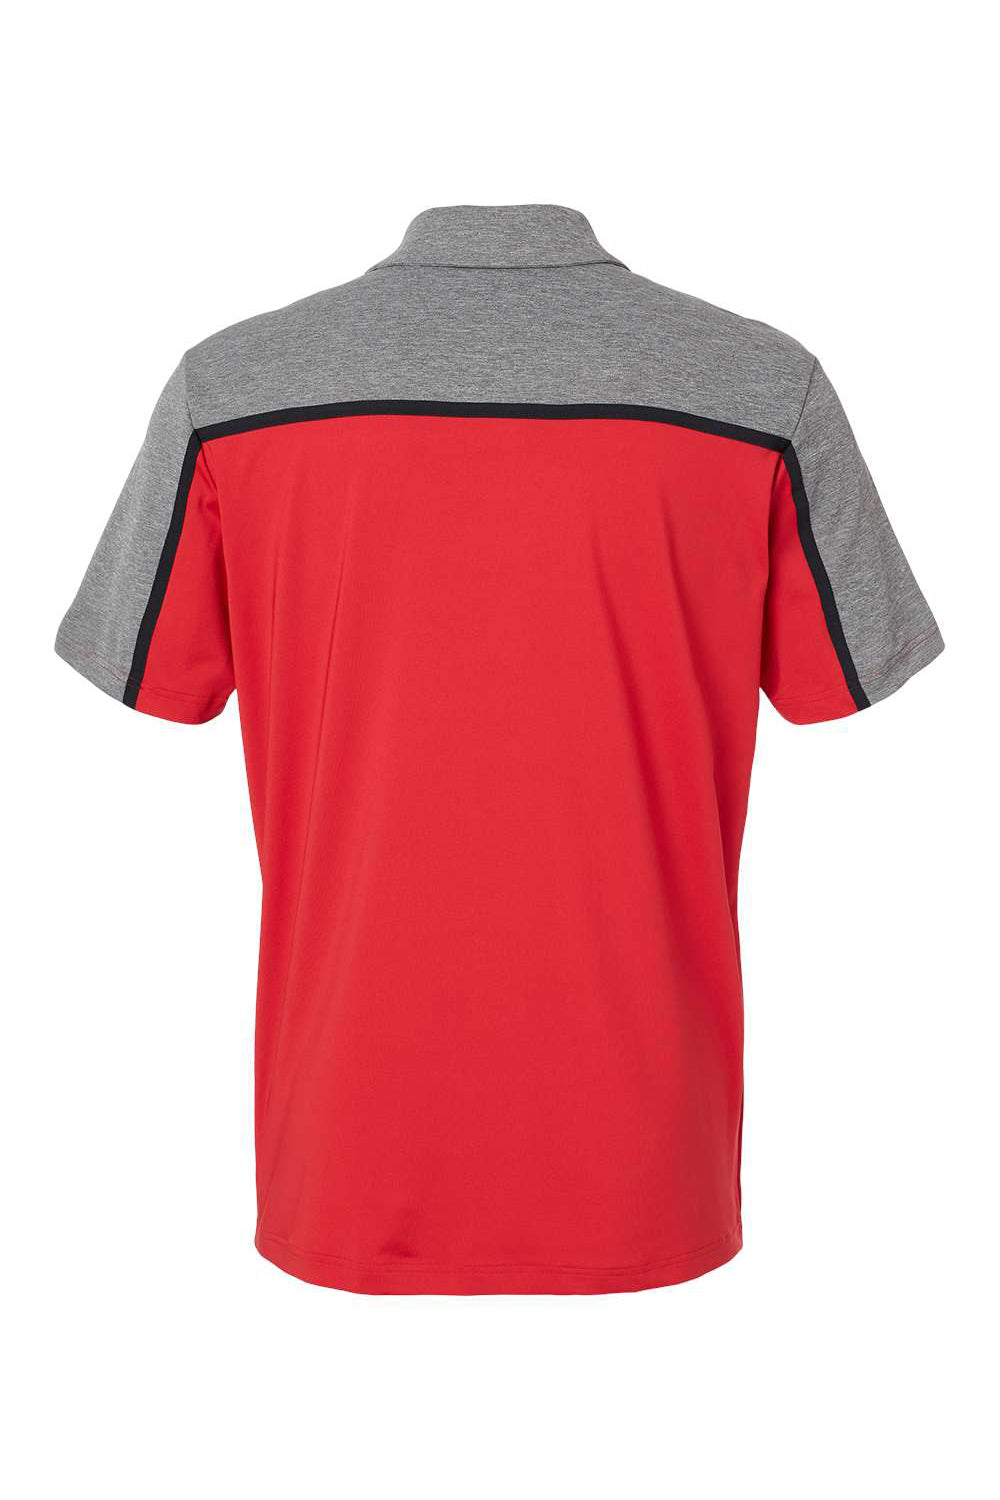 Adidas A512 Mens Ultimate Colorblocked Short Sleeve Polo Shirt Collegiate Red/Black/Grey Melange Flat Back